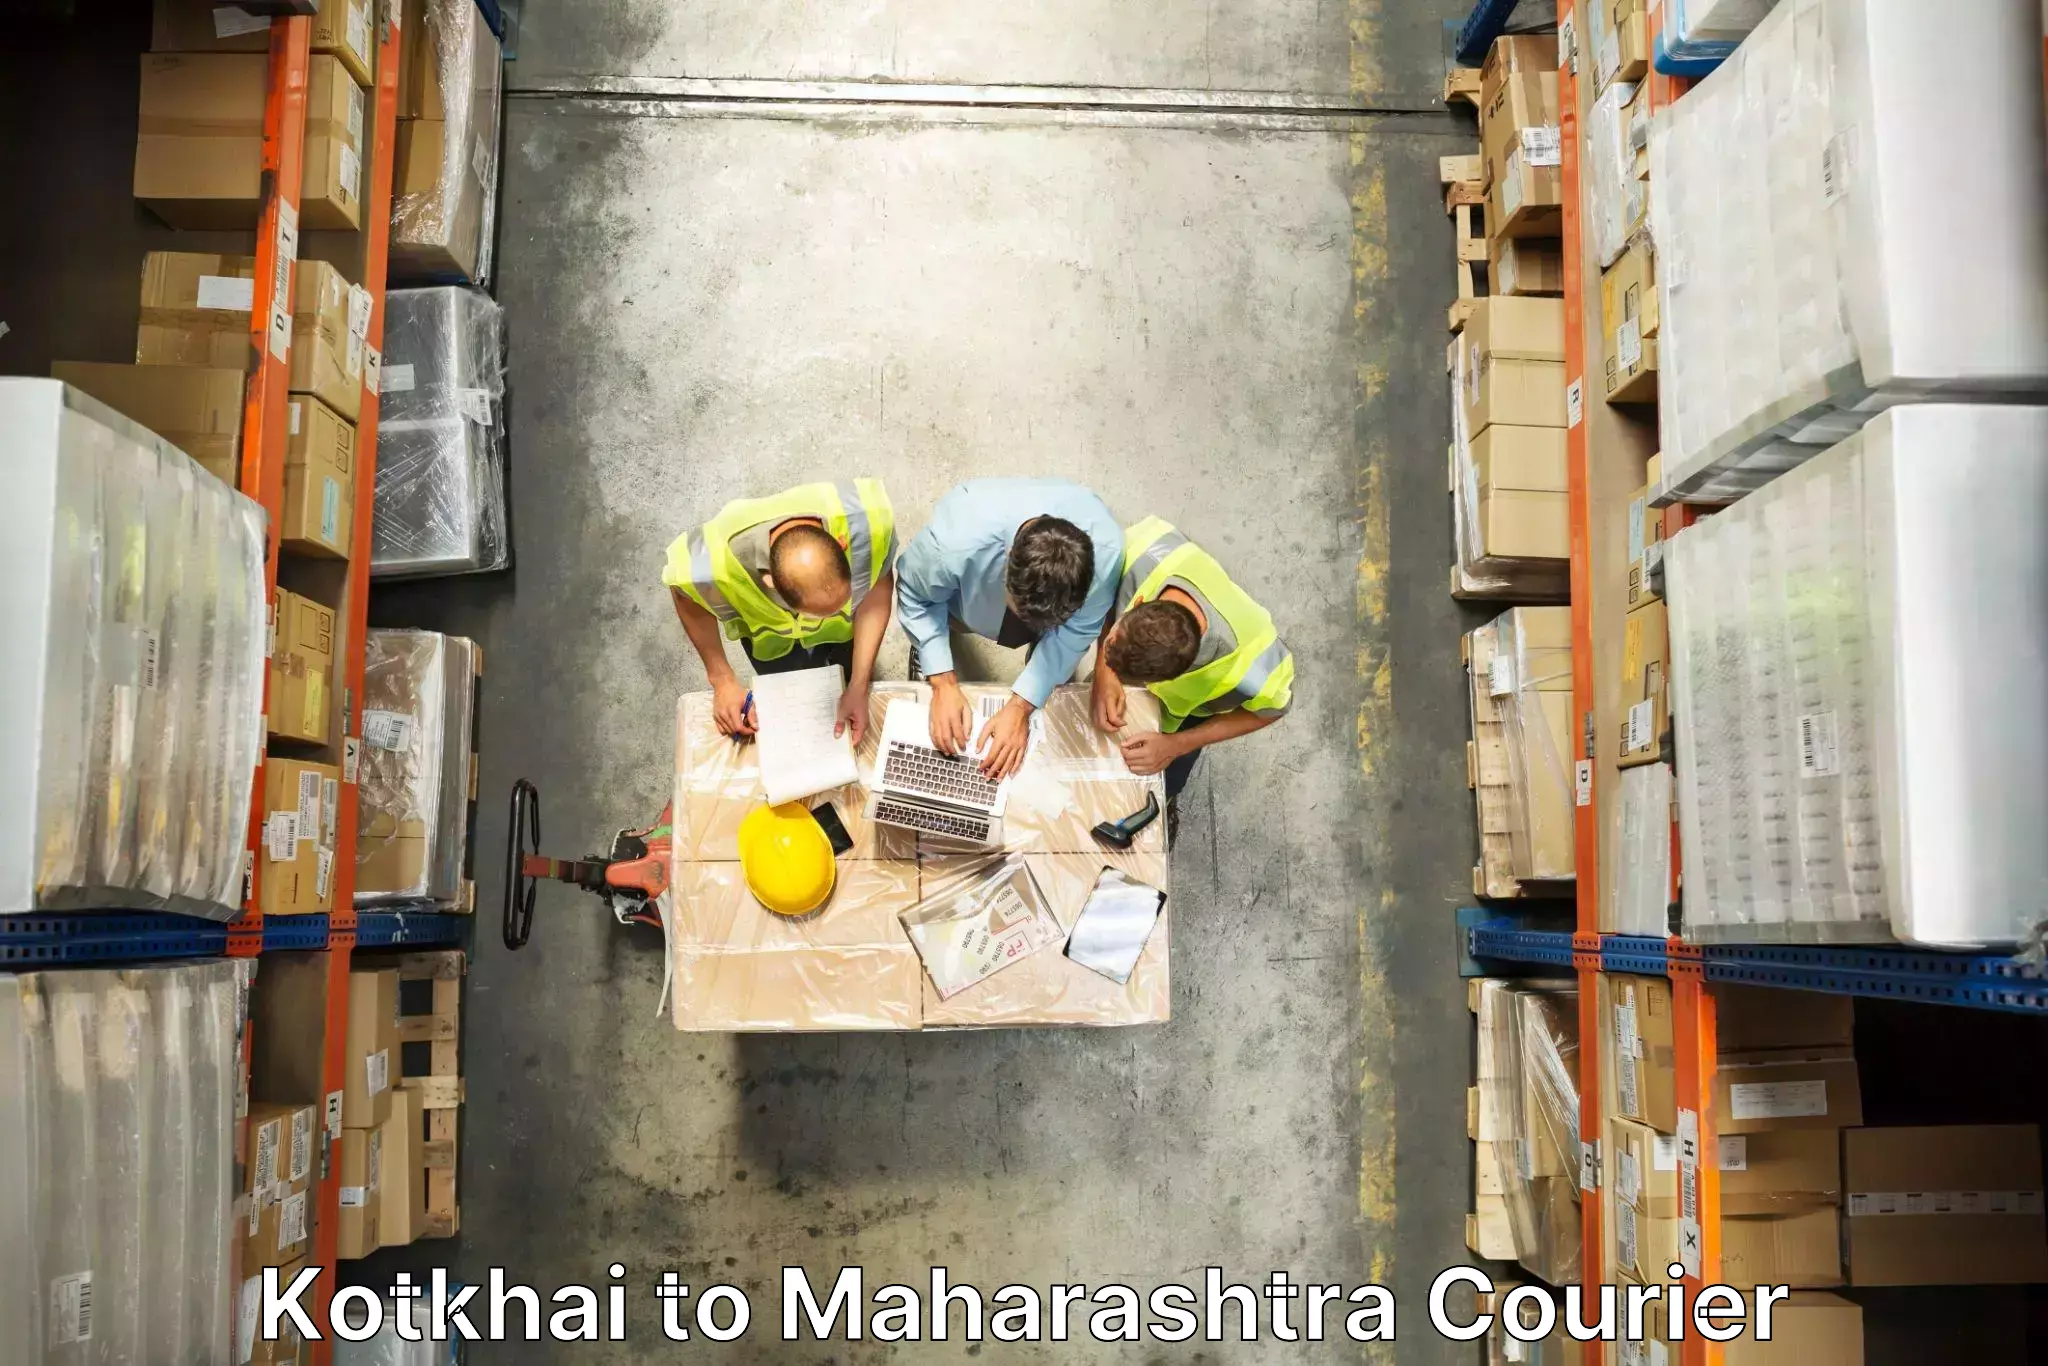 Furniture moving experts in Kotkhai to Tata Institute of Social Sciences Mumbai